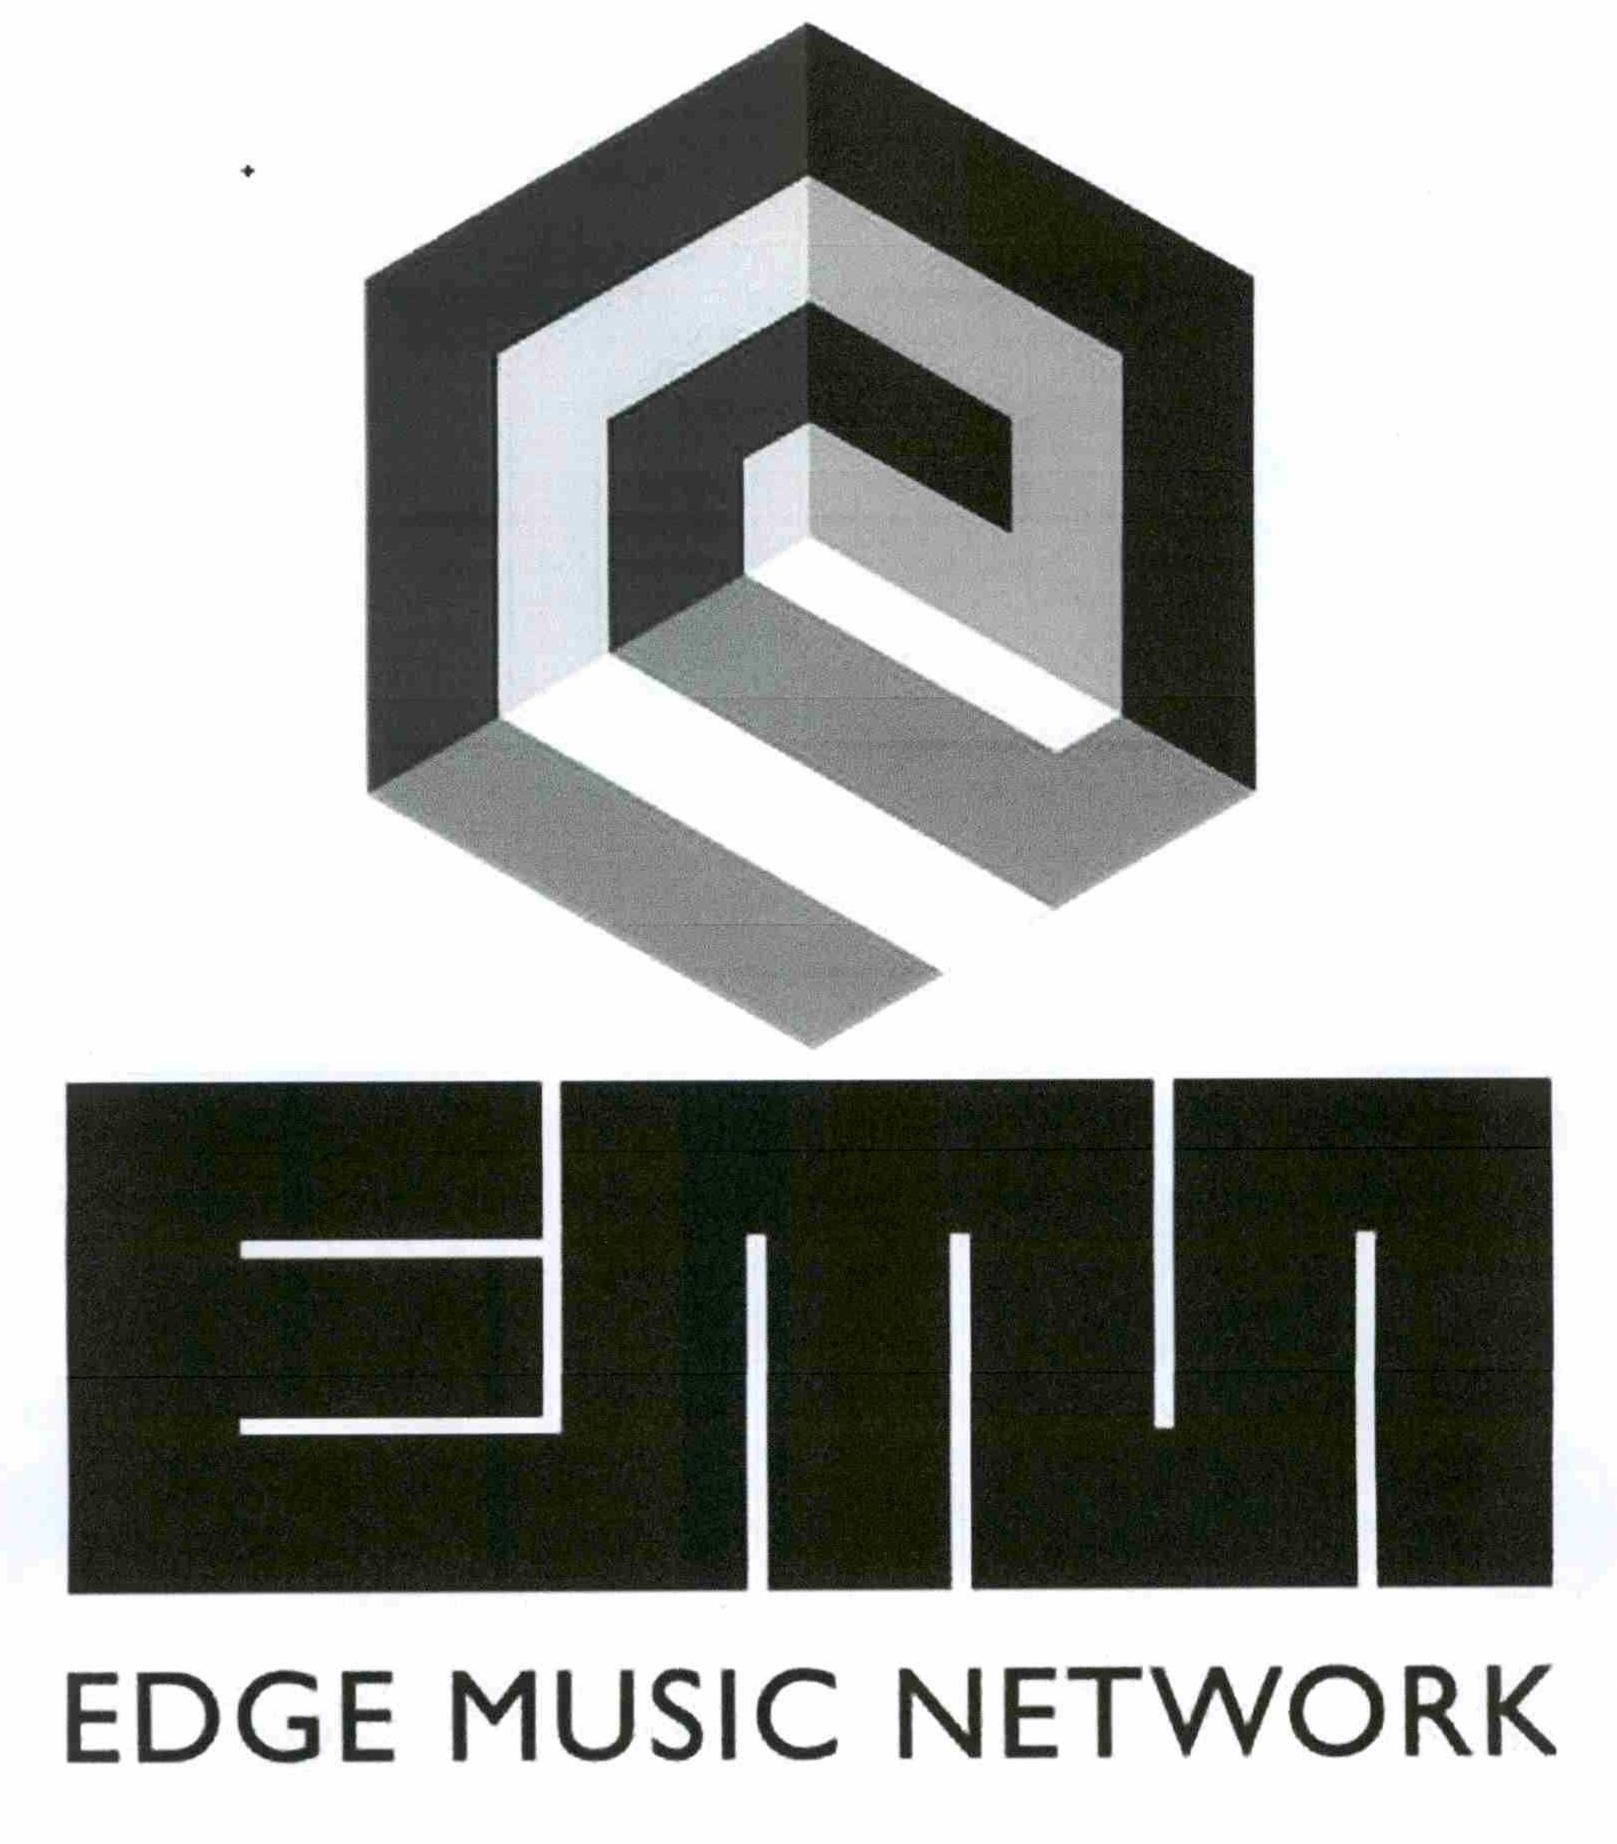 EMN EDGE MUSIC NETWORK